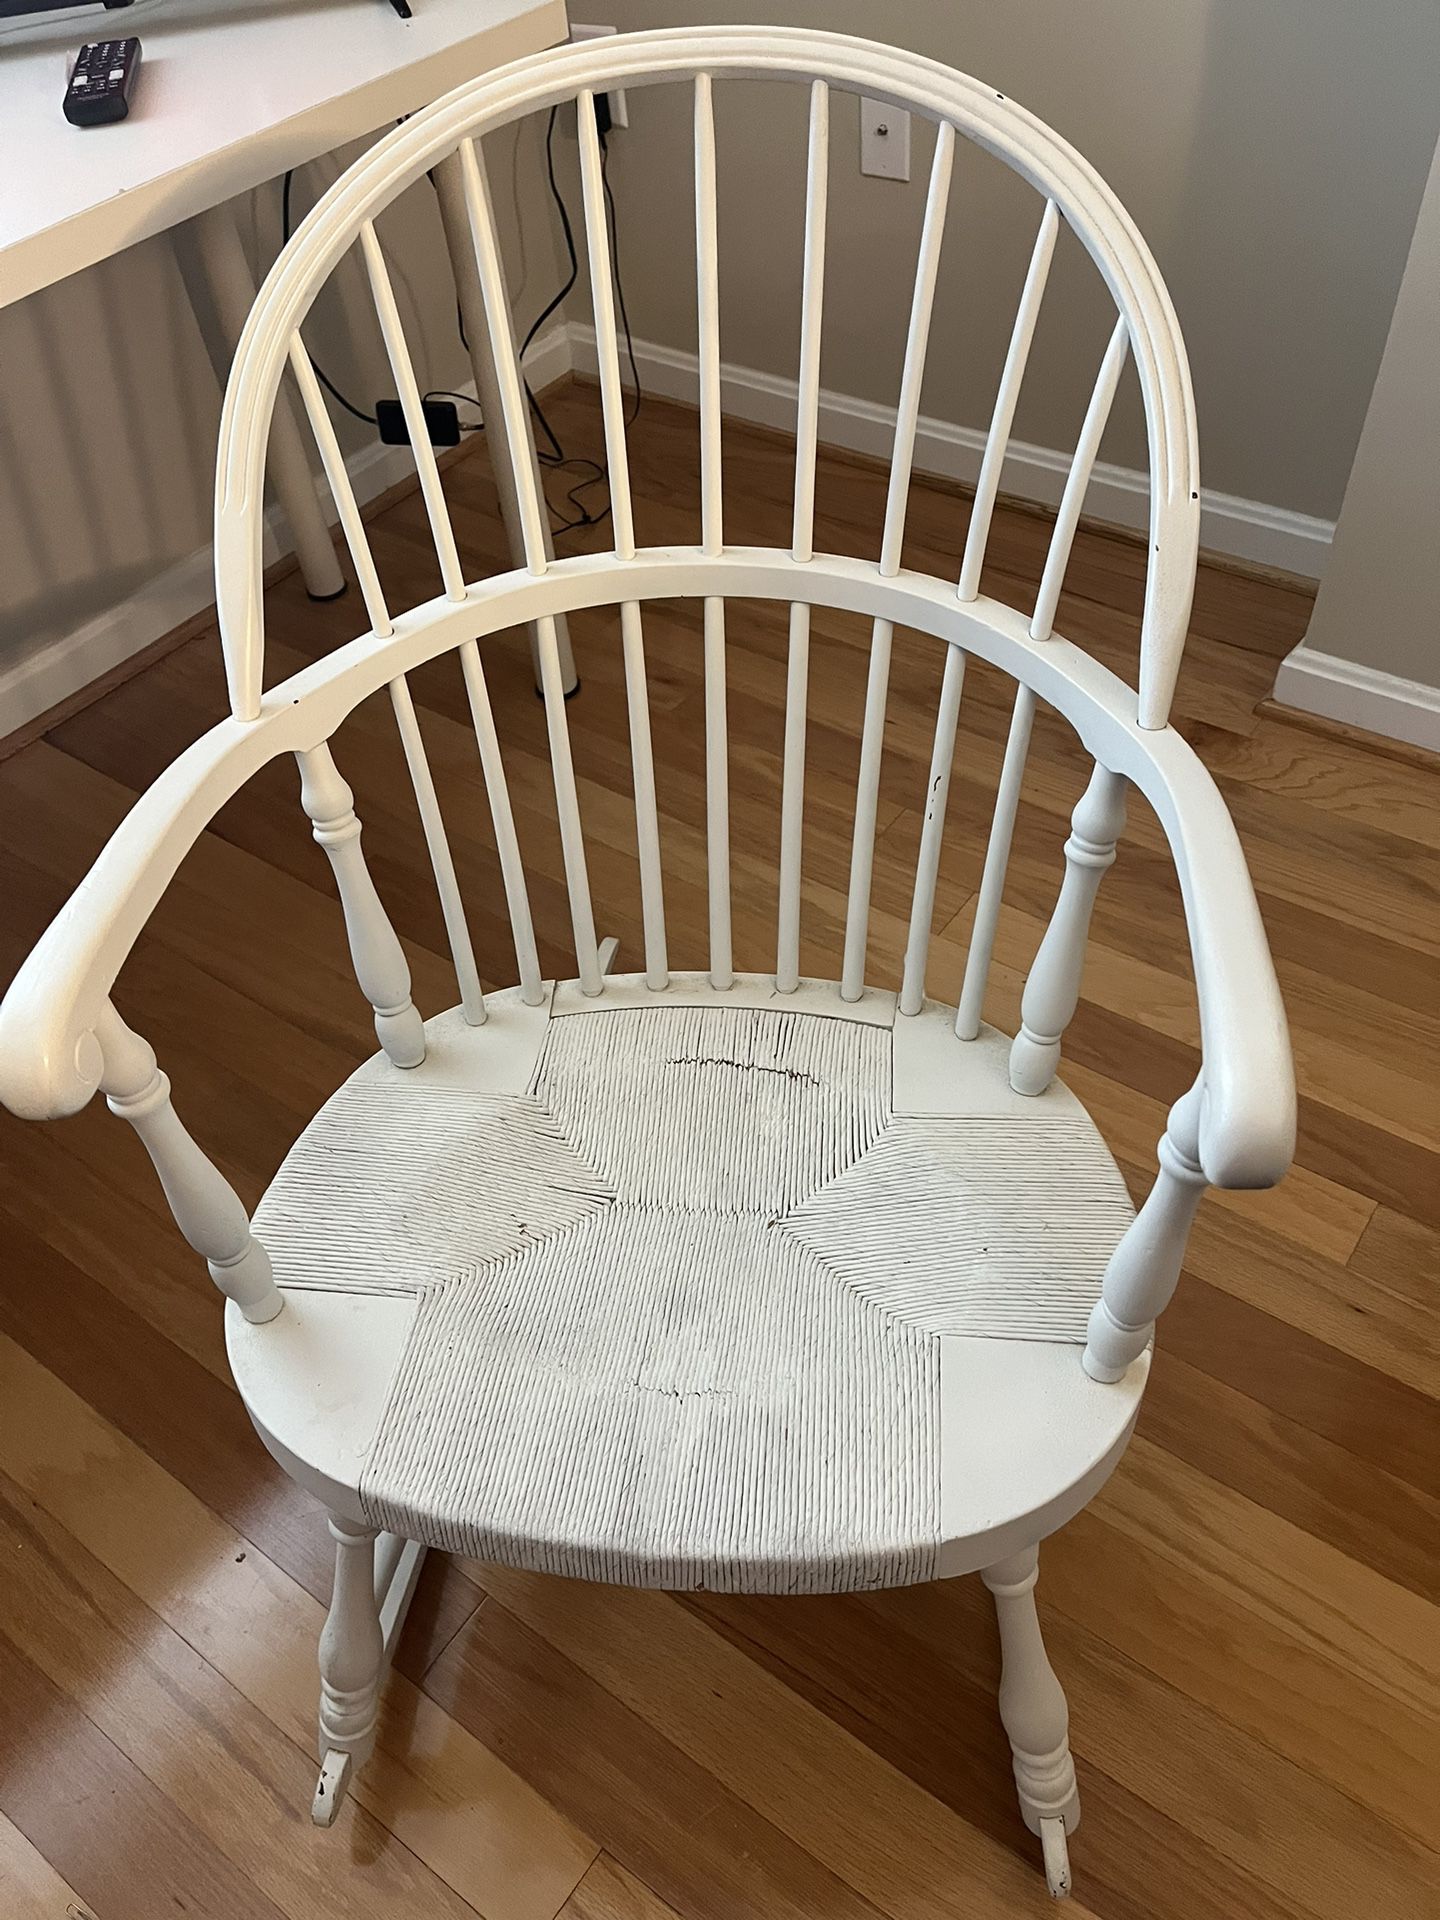 Rocking Chair - Antique